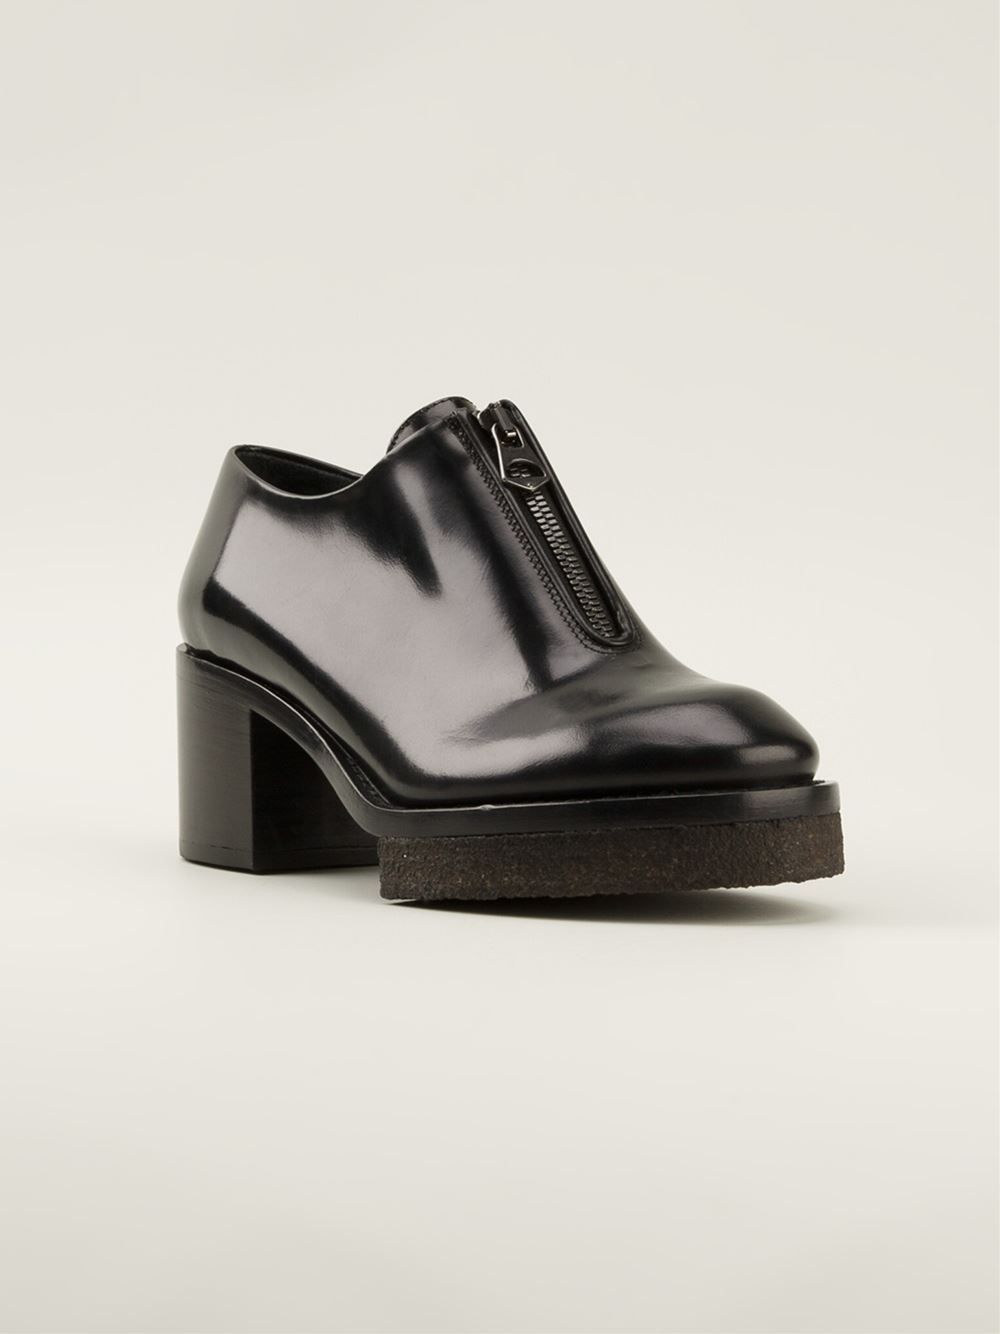 Acne Studios 'Mya' Oxford Shoes in Black - Lyst